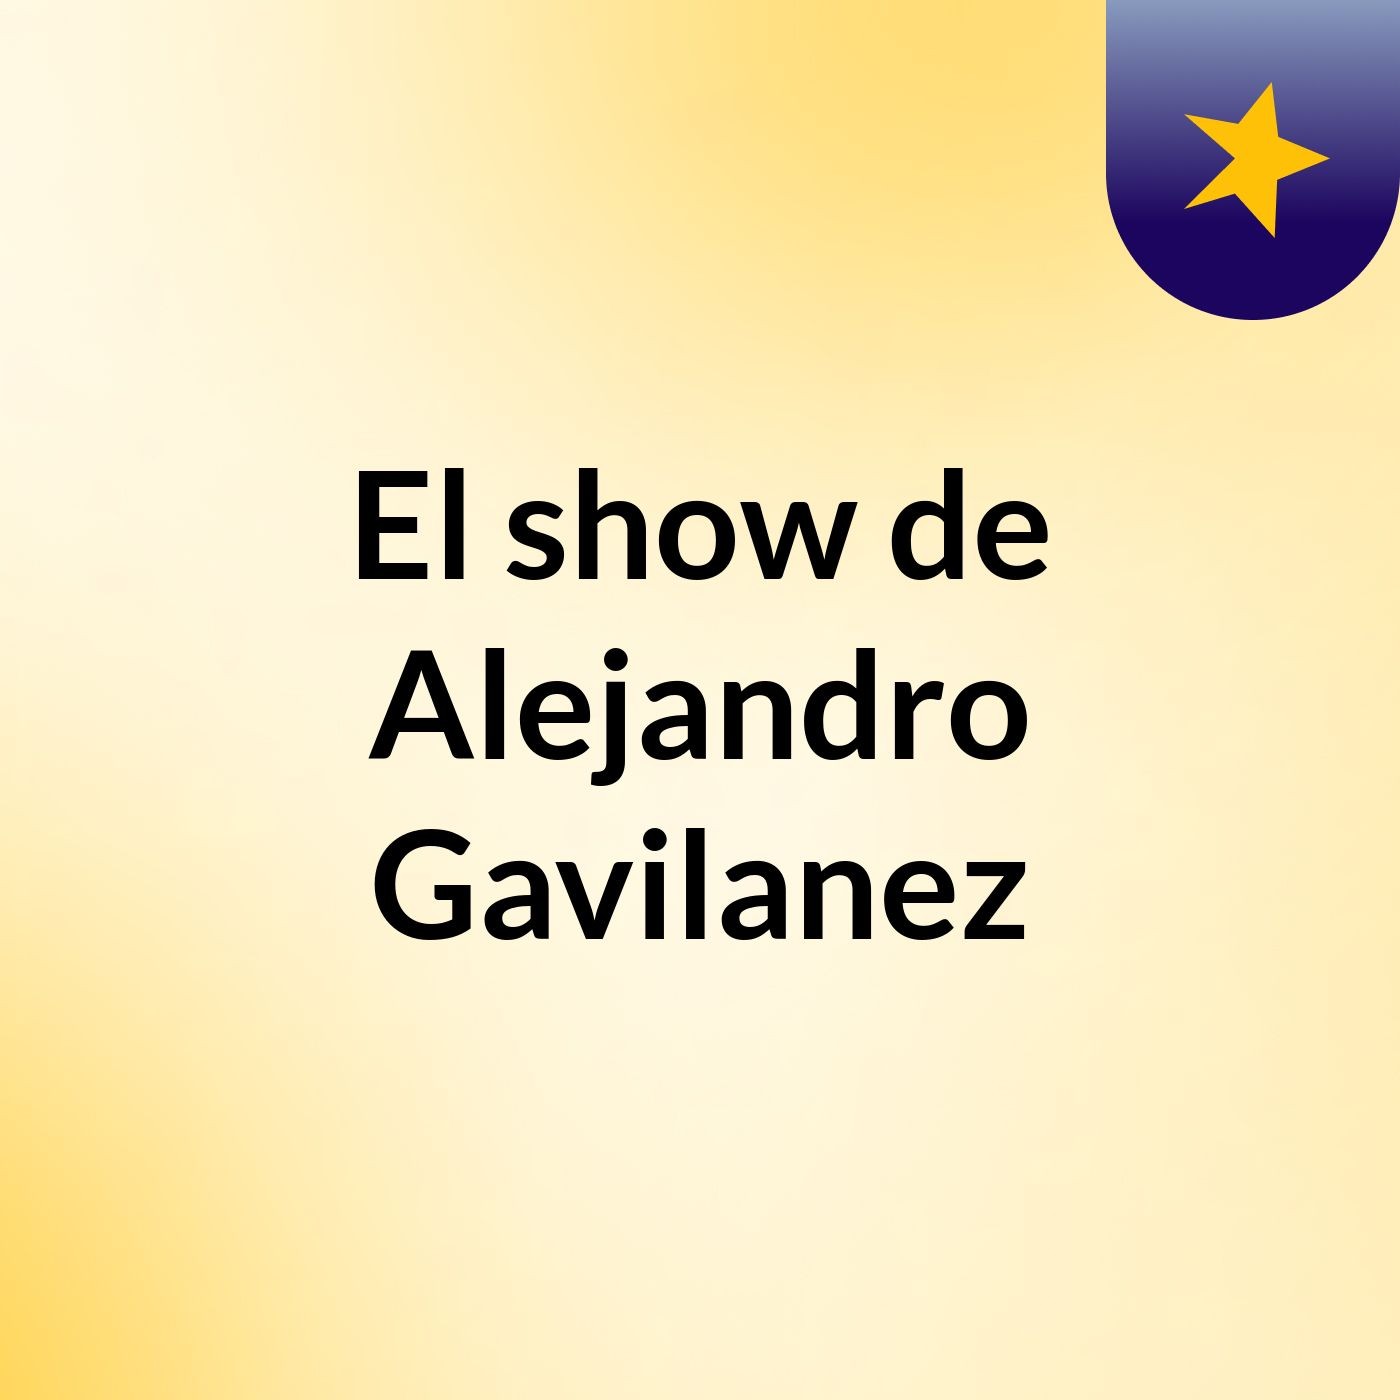 El show de Alejandro Gavilanez